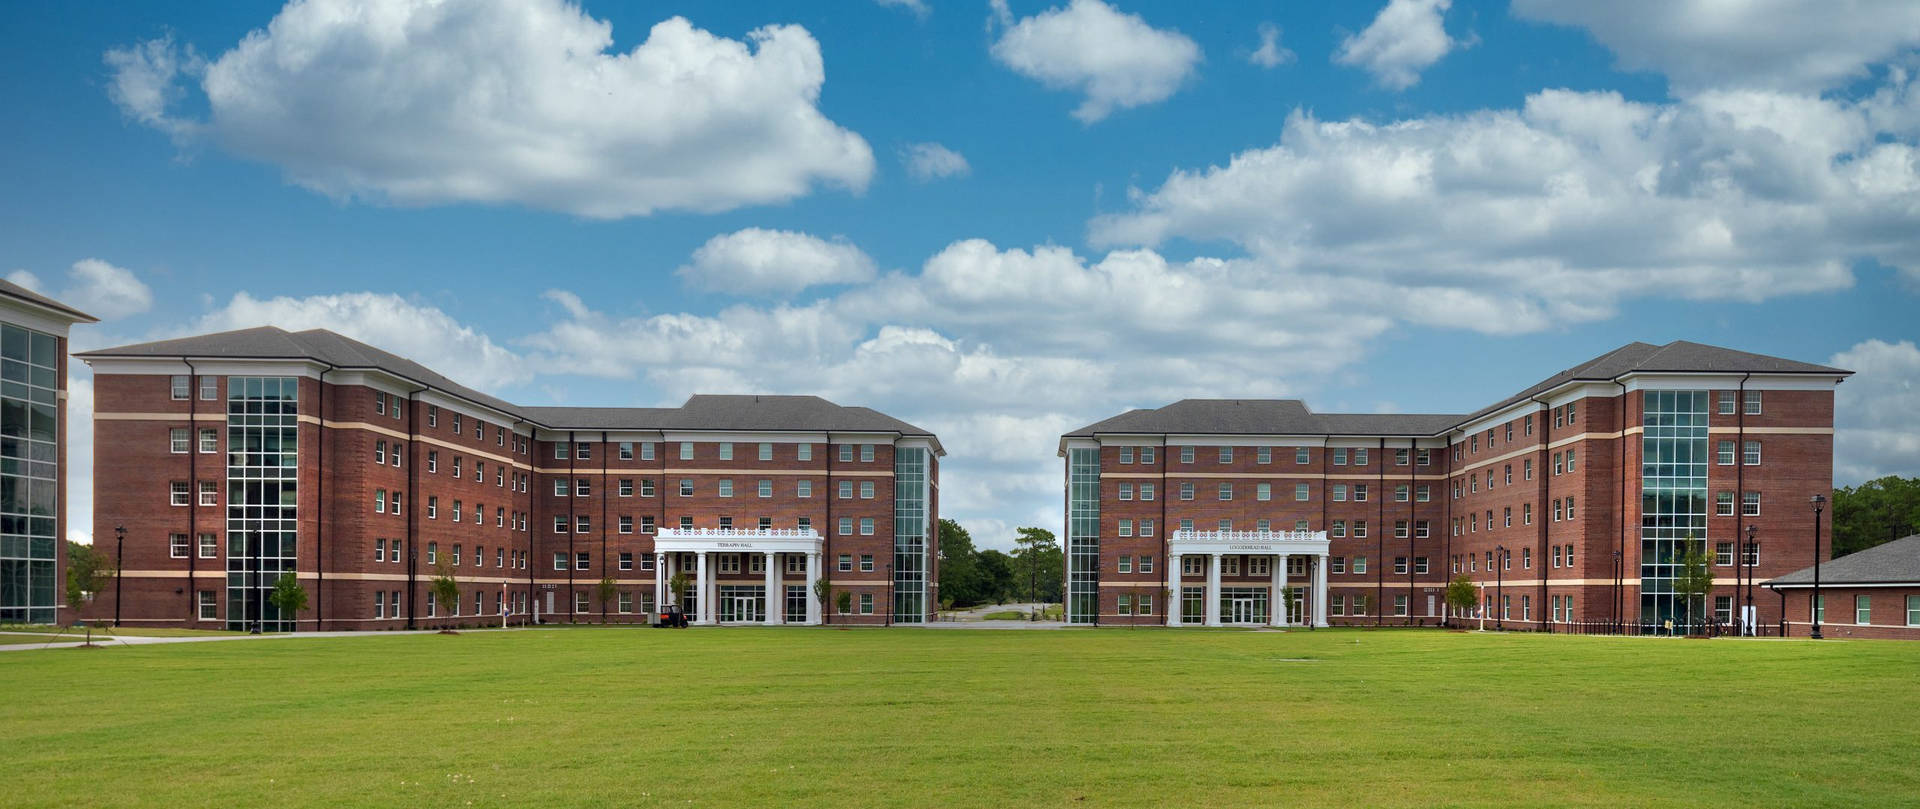 University Of North Carolina Student Residences Wallpaper